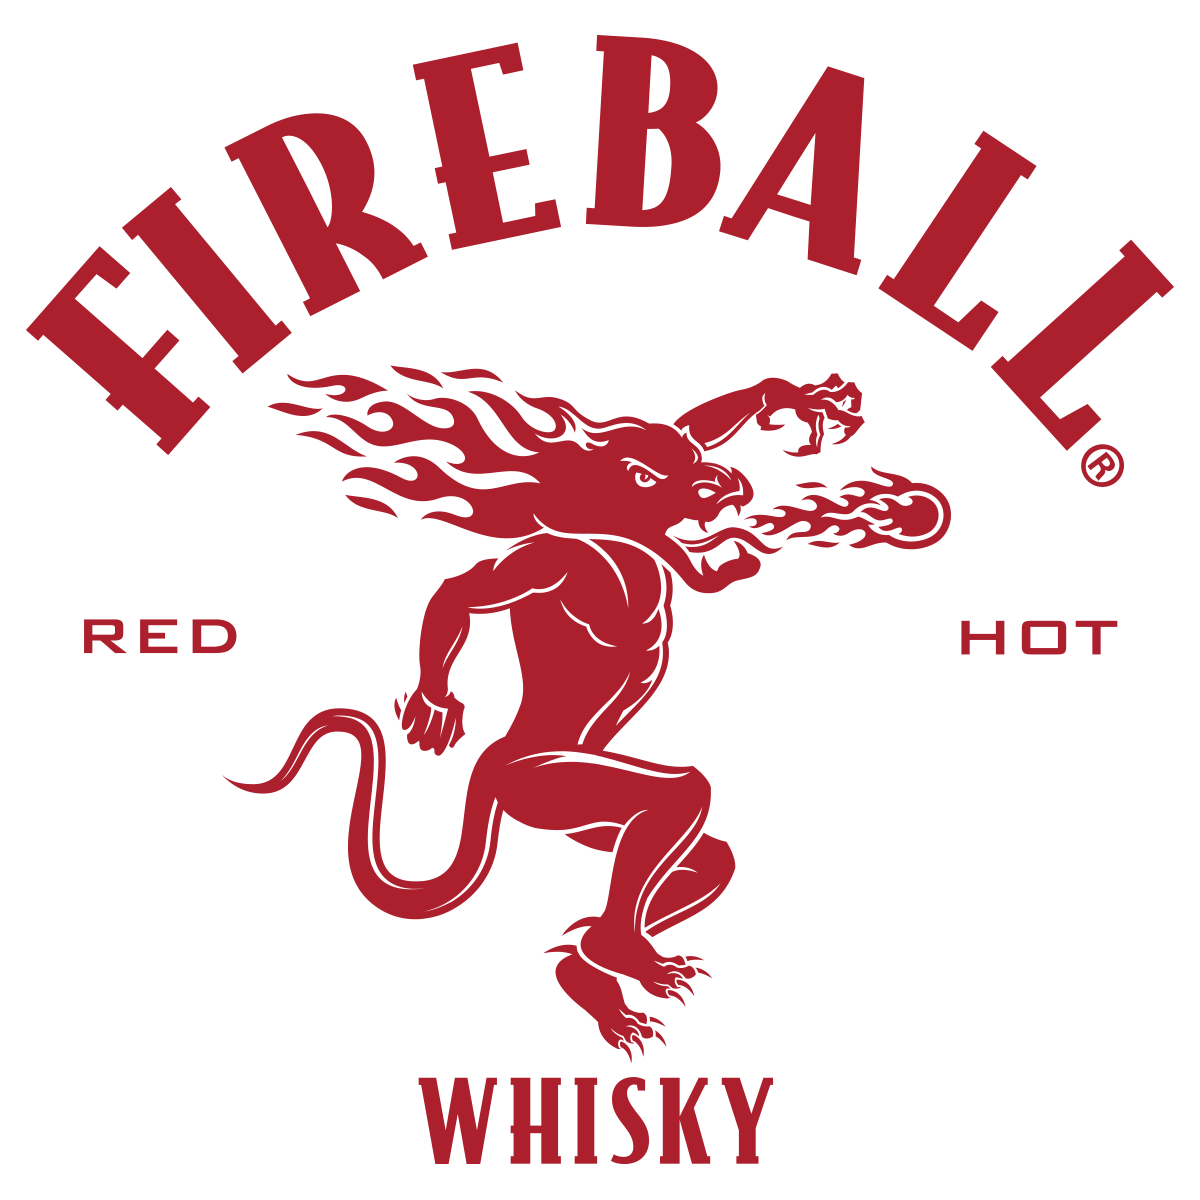 Fireball Proxies